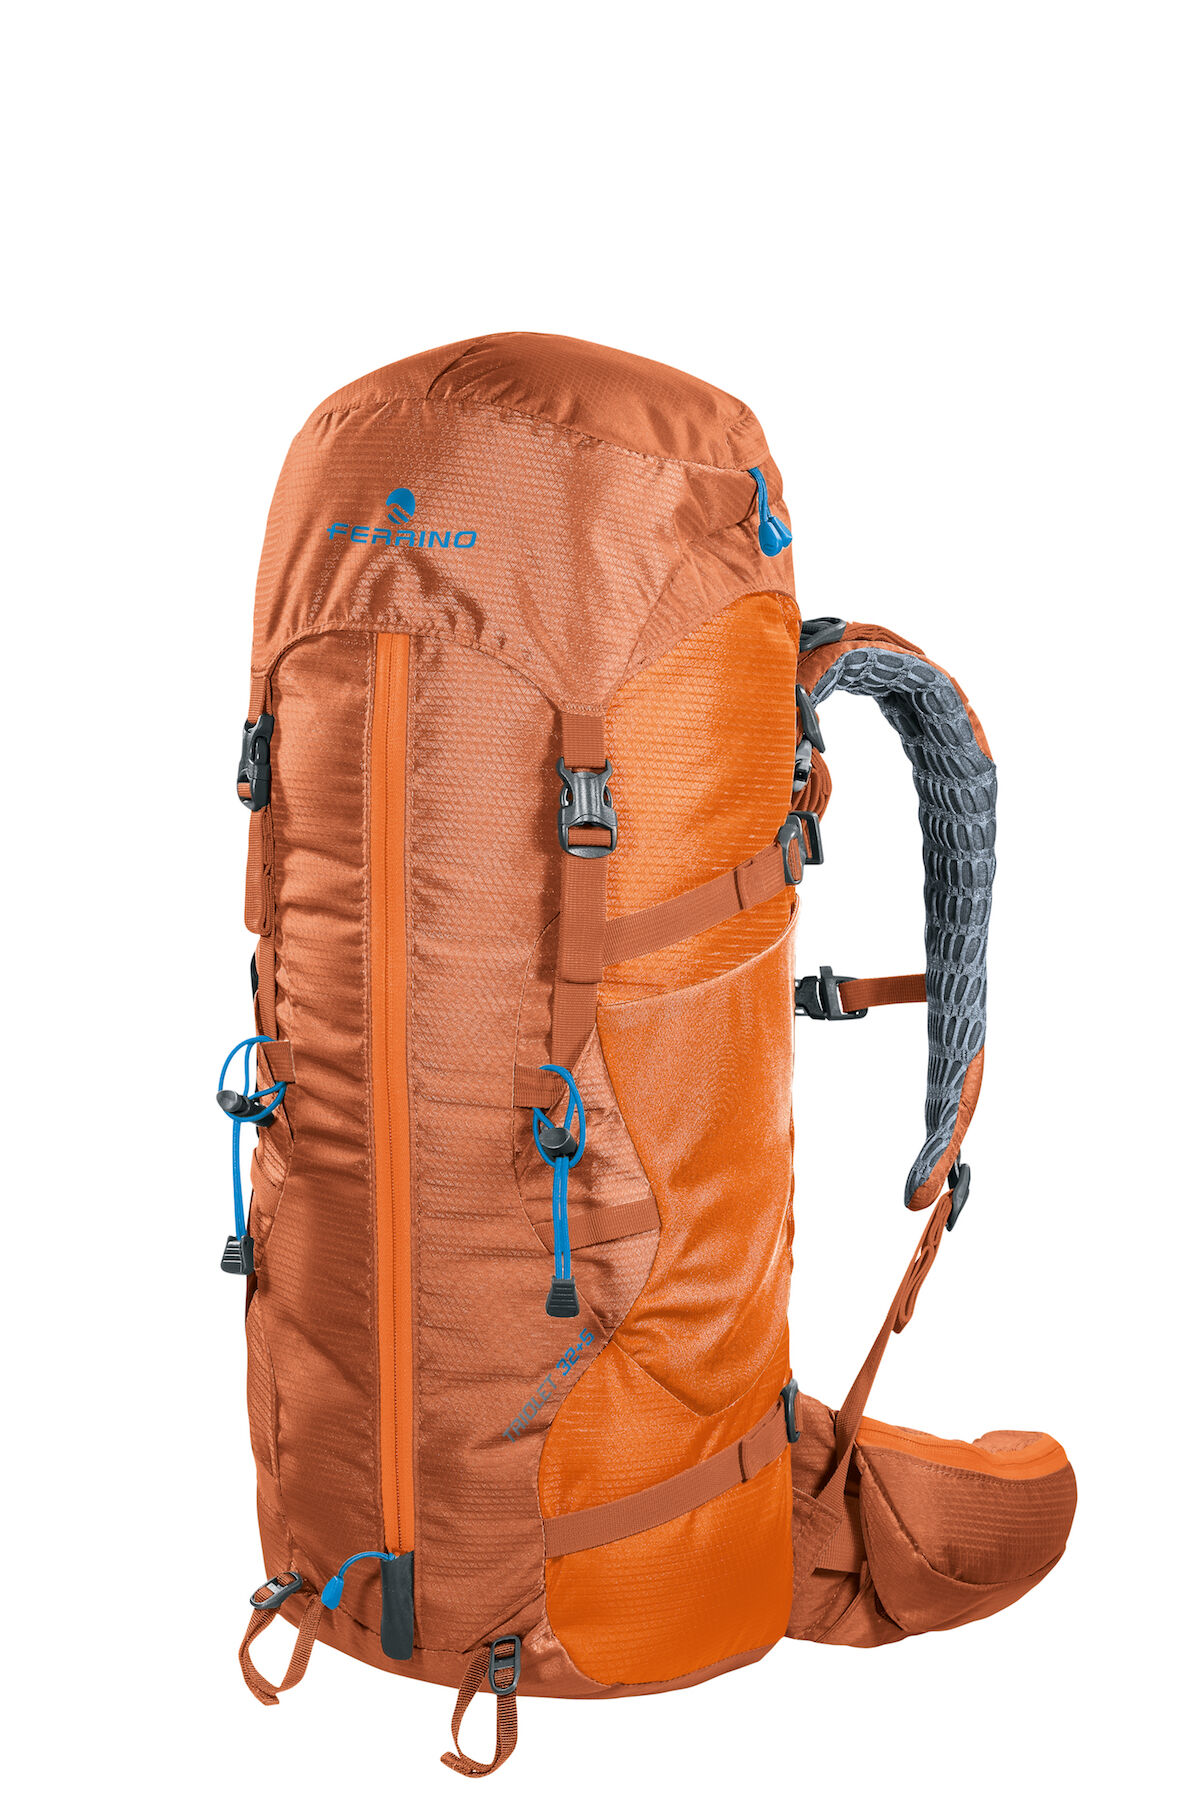 Ferrino Triolet 32+5 - Hiking backpack